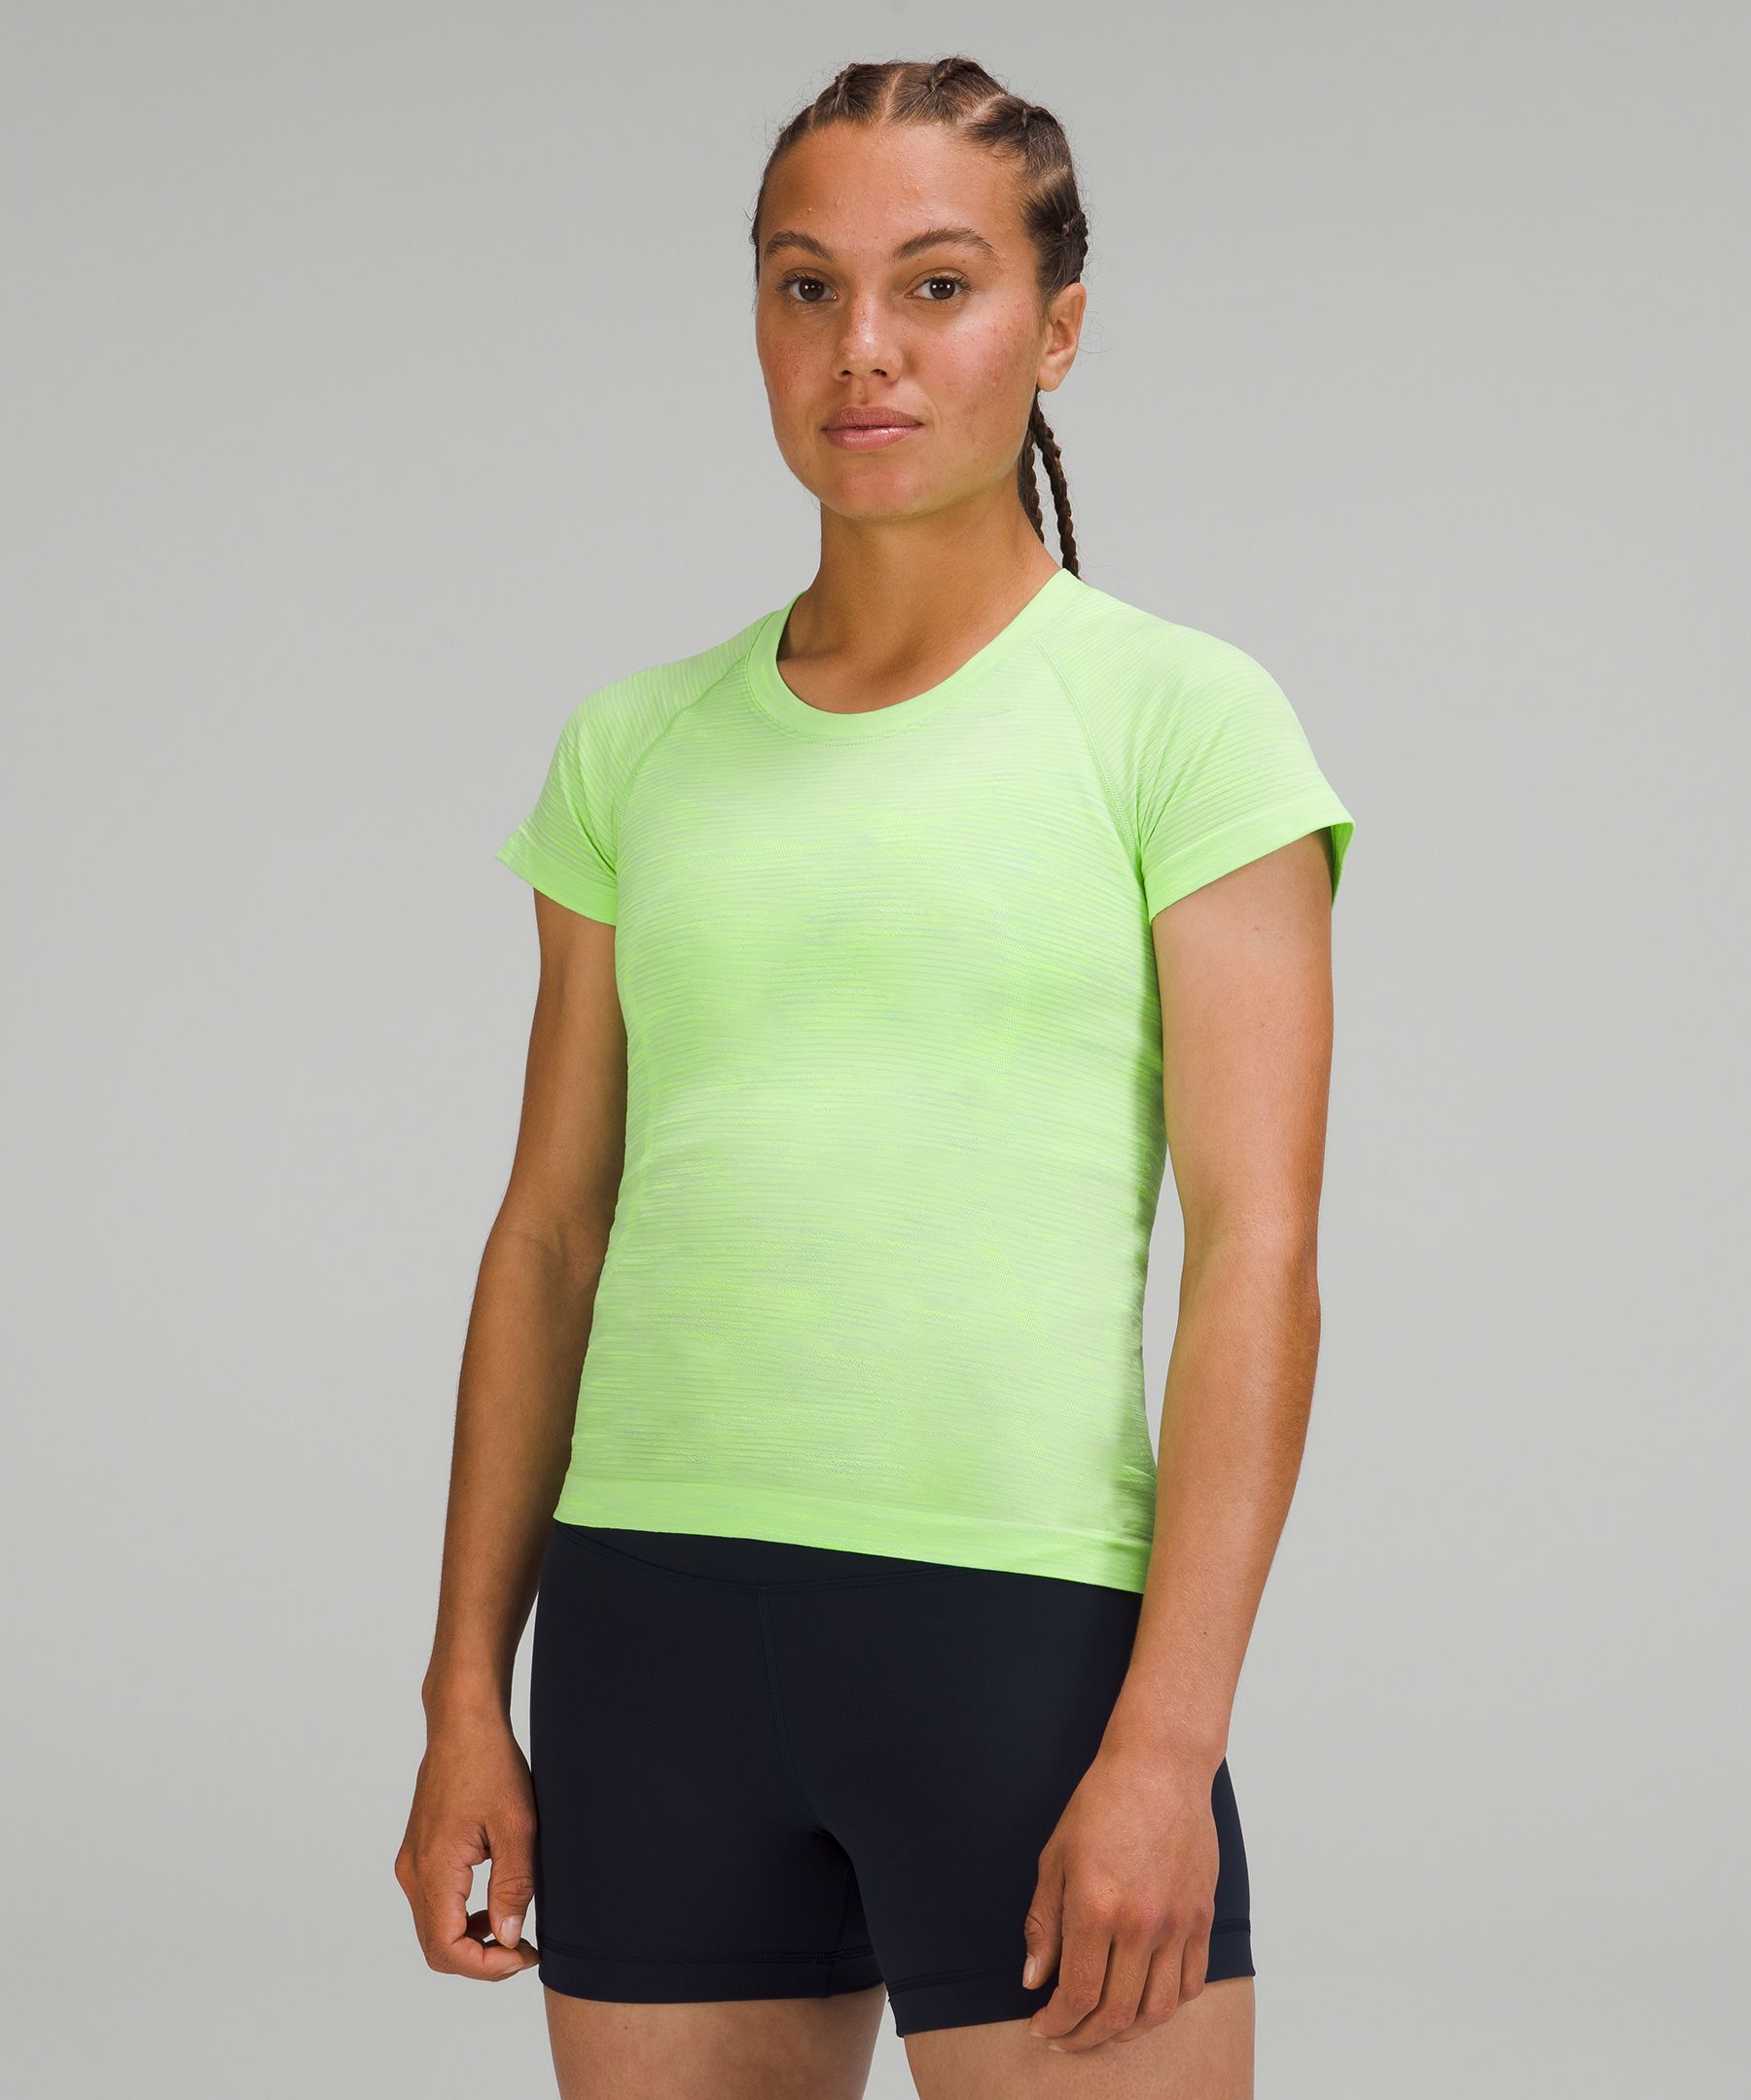 Lululemon - Swiftly Tech Short Sleeve Shirt 2.0 *Race Length Online Only